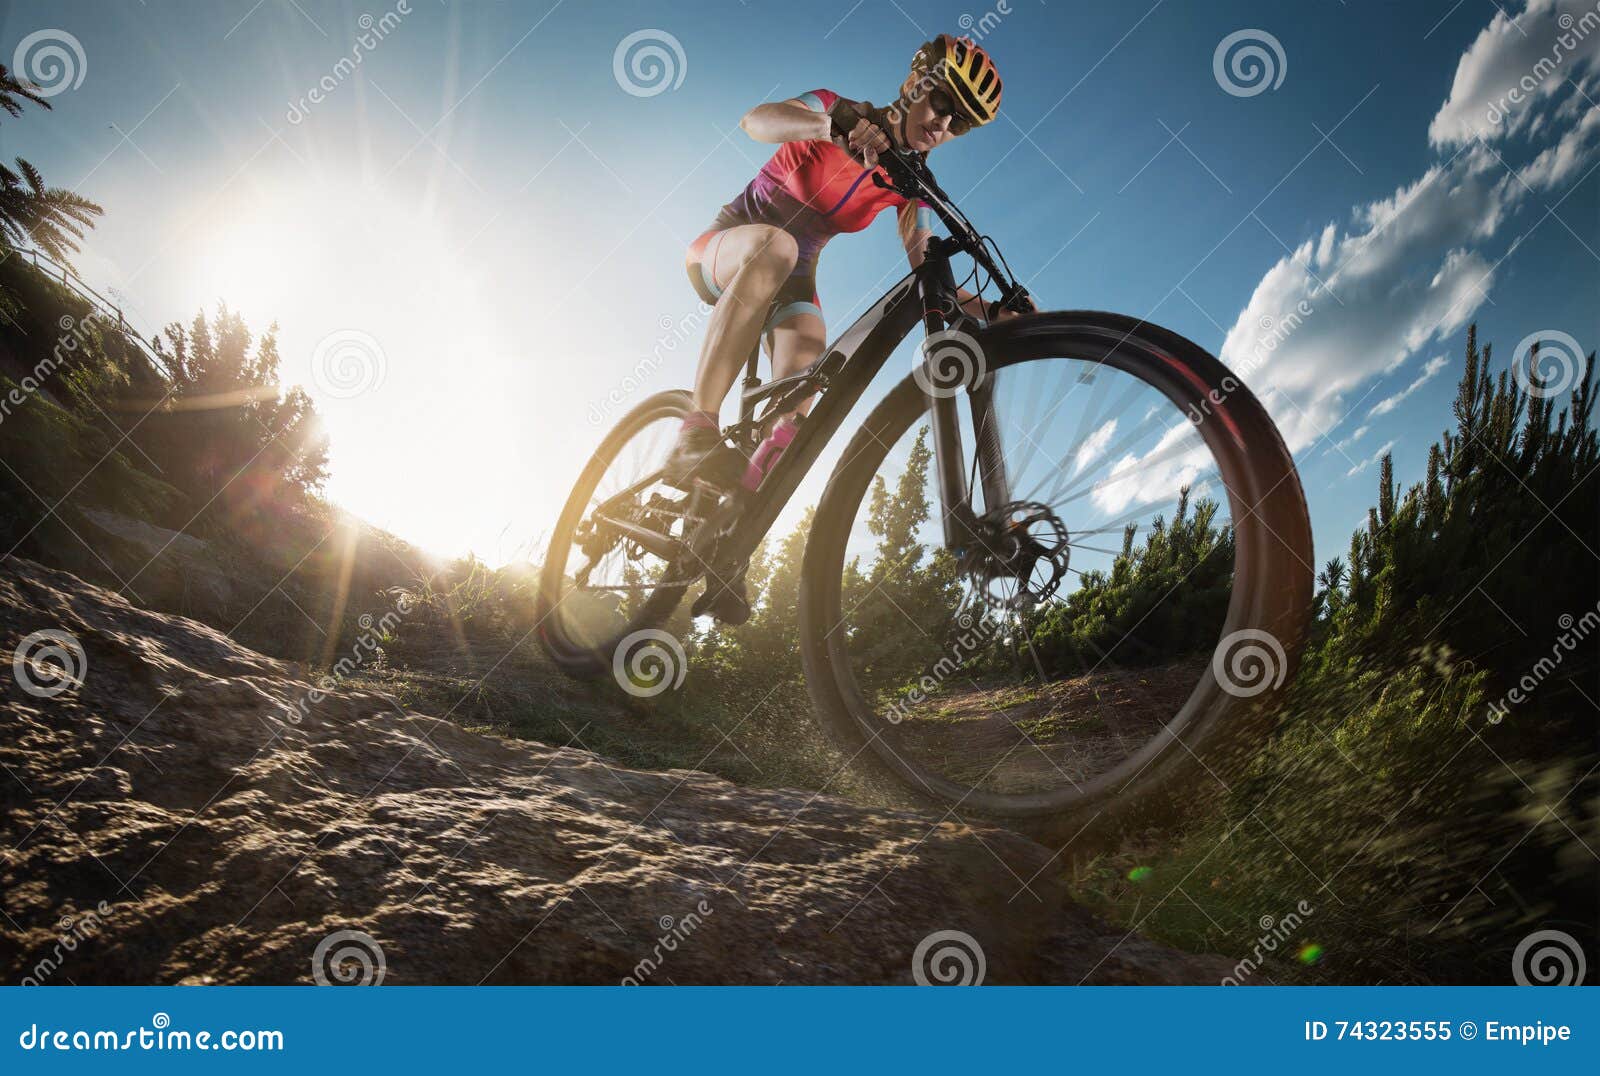 mountain bike cyclist